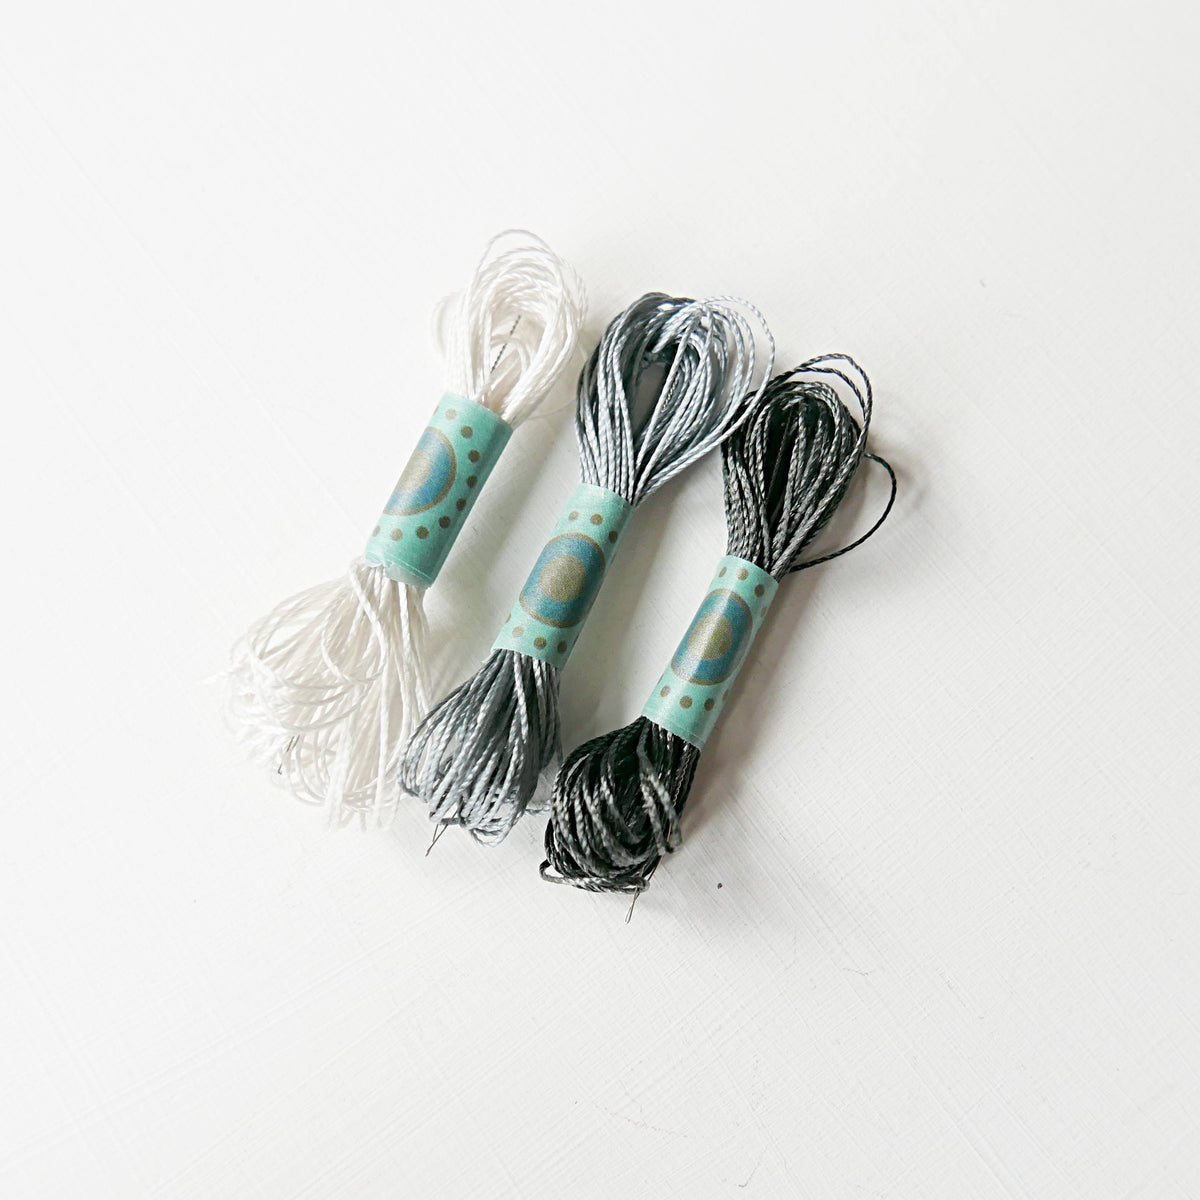 Nylon cord and steel needle to make your mala necklace - MeraKalpa Malas